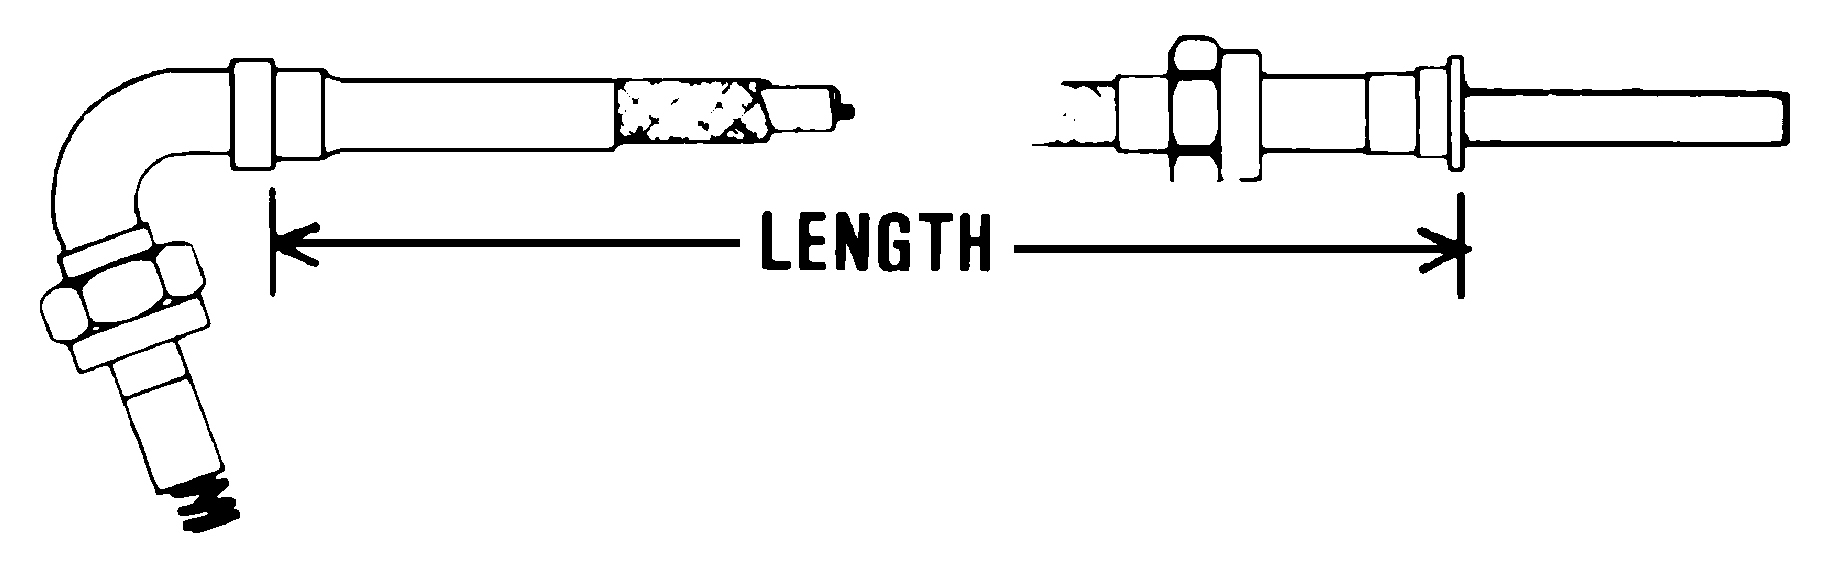 ignition-lead-model-102.jpg